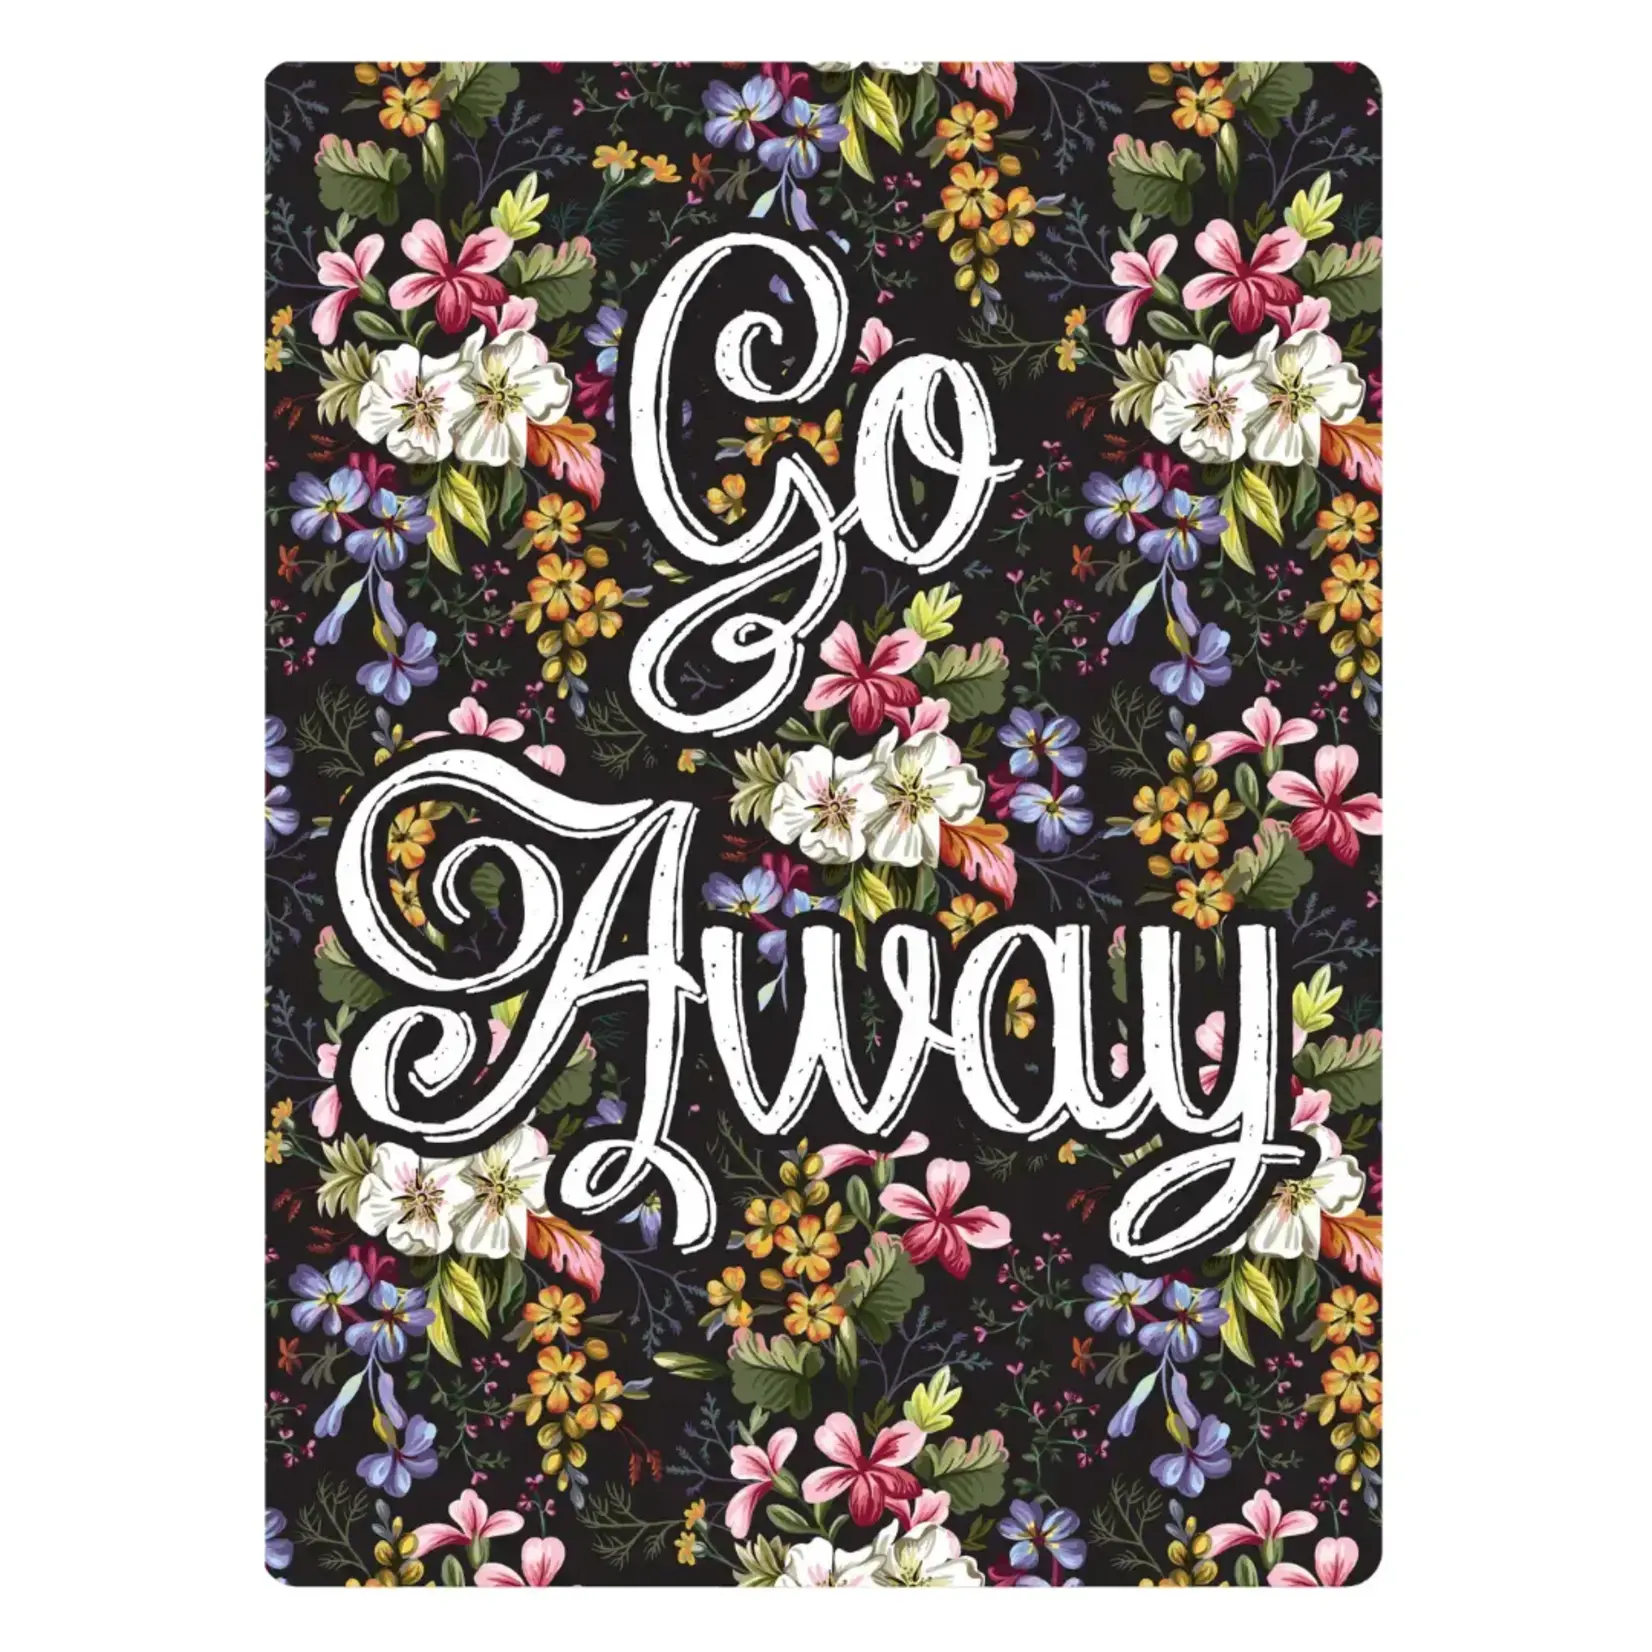 Sign - Go away (floral)